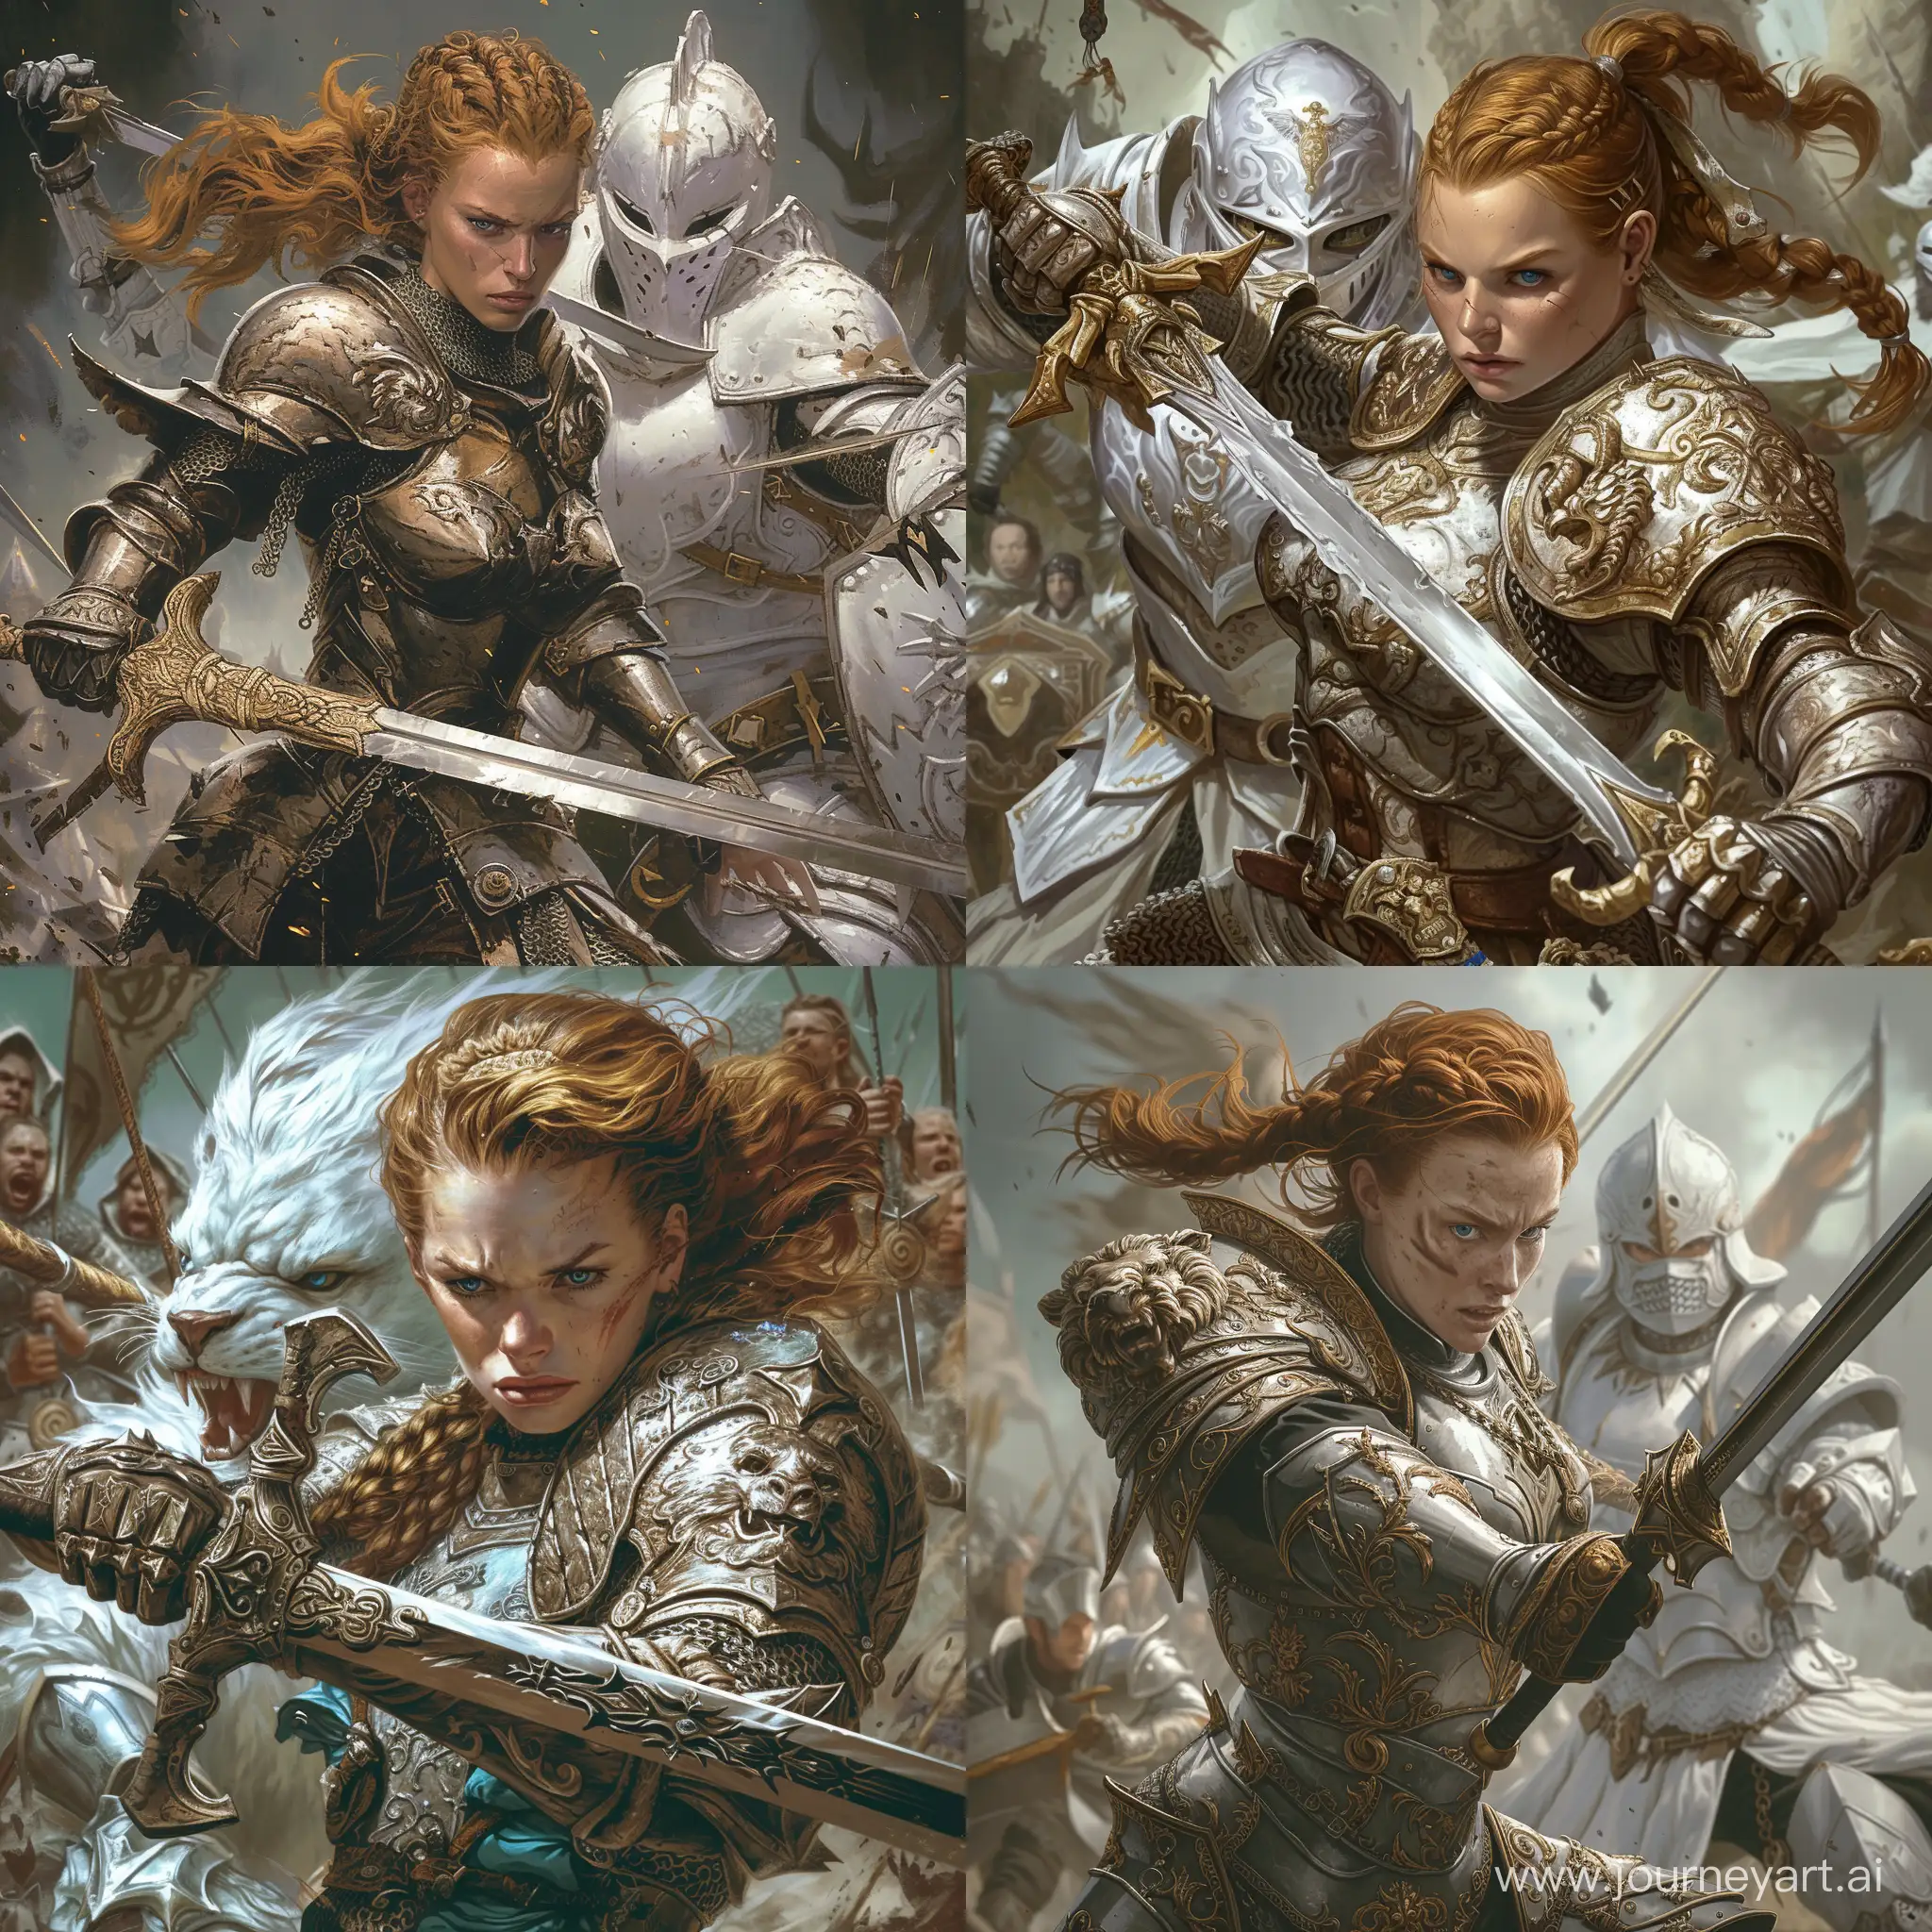 Stoic-Female-Knight-in-Ornate-Silver-Armor-Battling-Alongside-Comrade-in-Dark-Fantasy-Battlefield